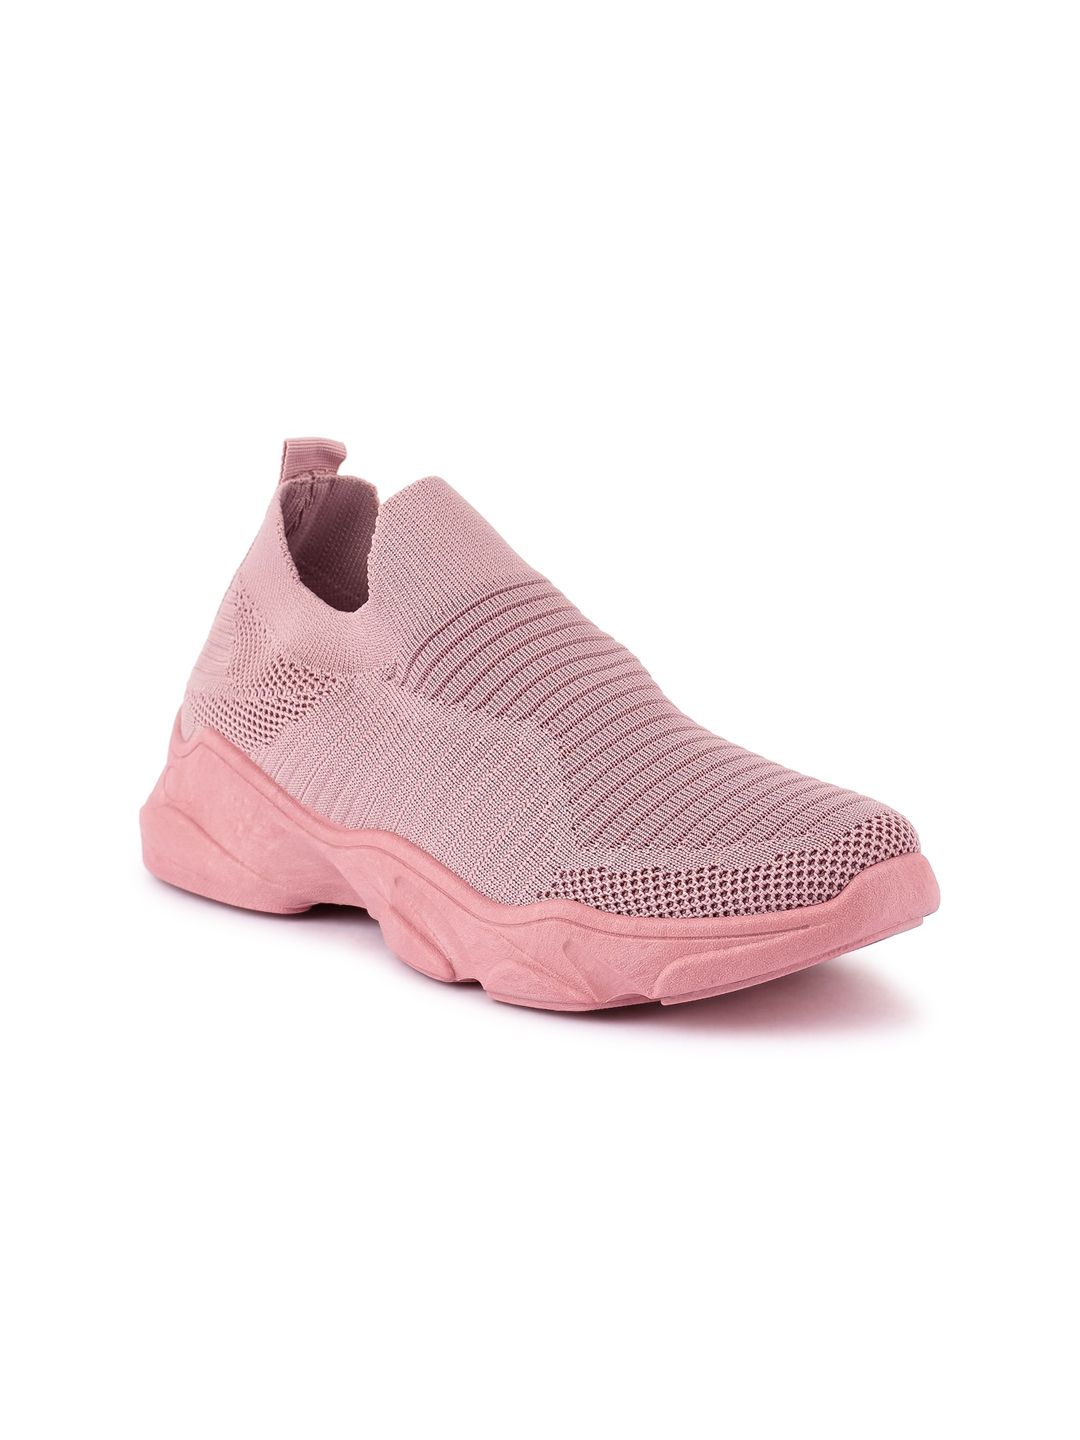 London Rag Women Pink Woven Design Slip-On Sneakers Price in India